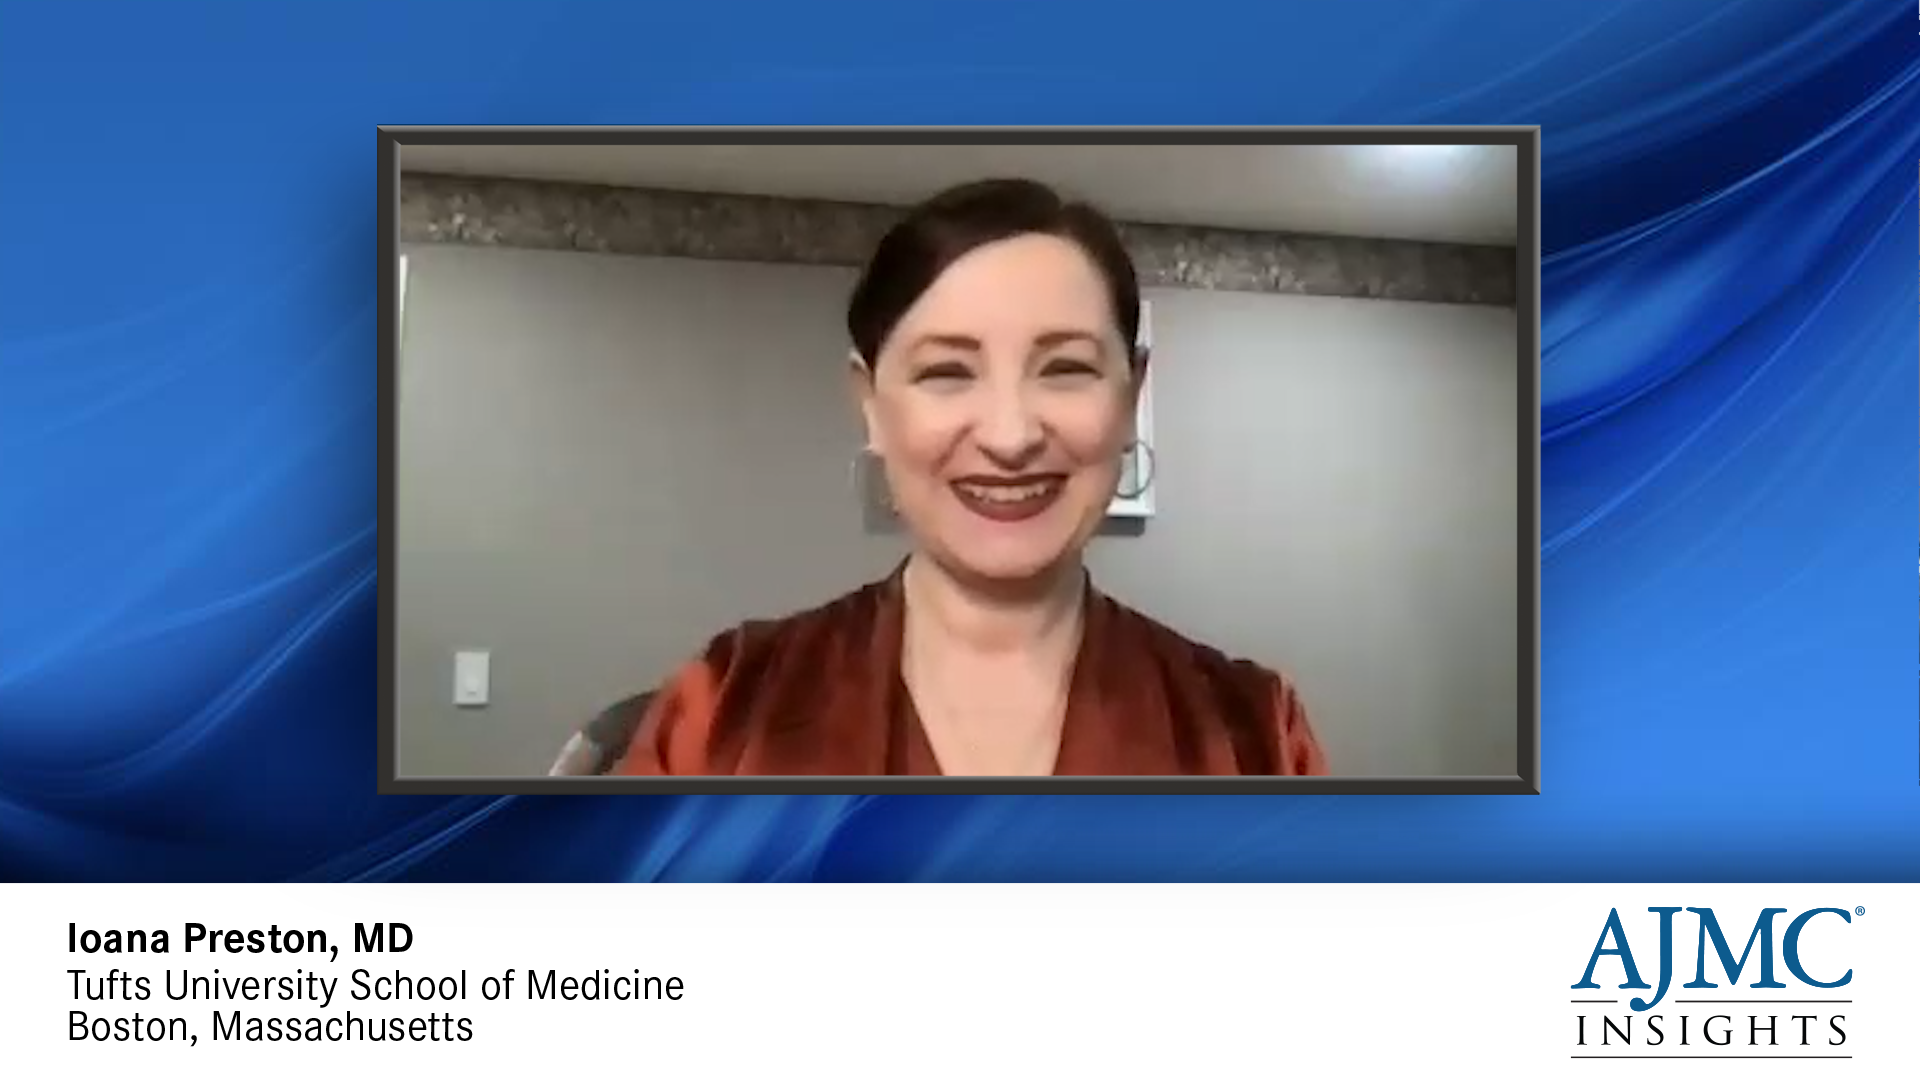 Ioana Preston, MD, a pulmonologist